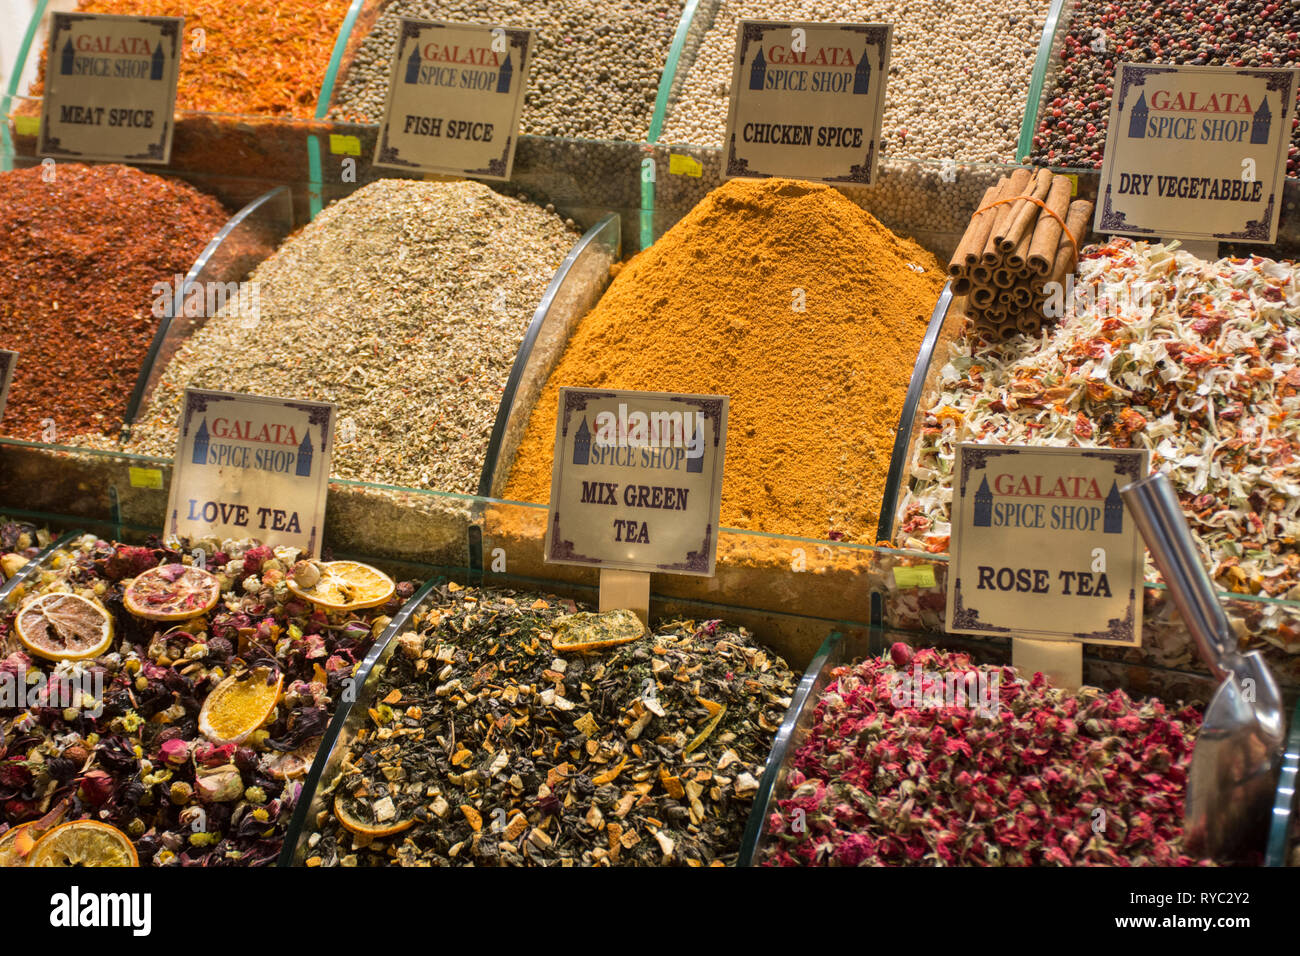 Spice Shop am Markt Eminönü Istanbul Türkei Stockfoto